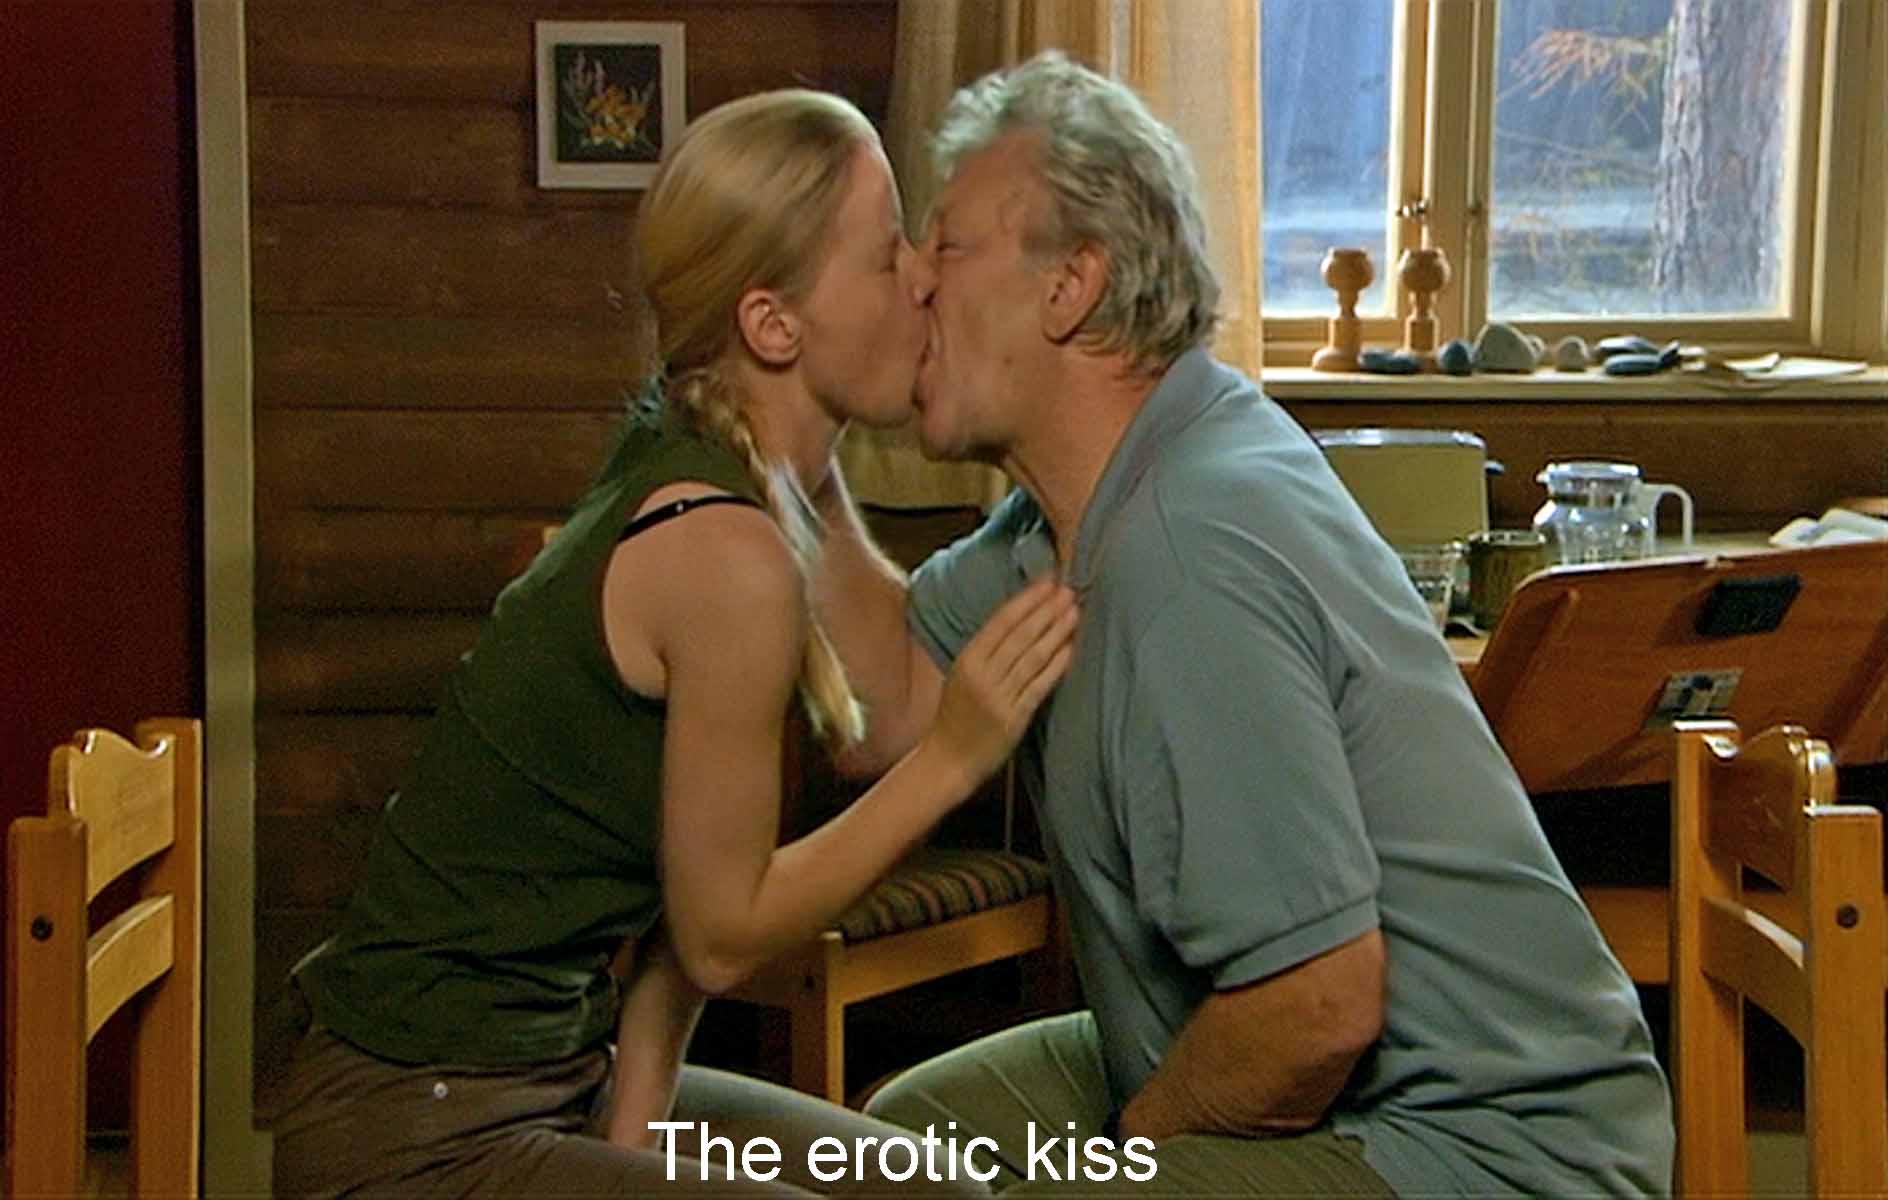 The erotic kiss